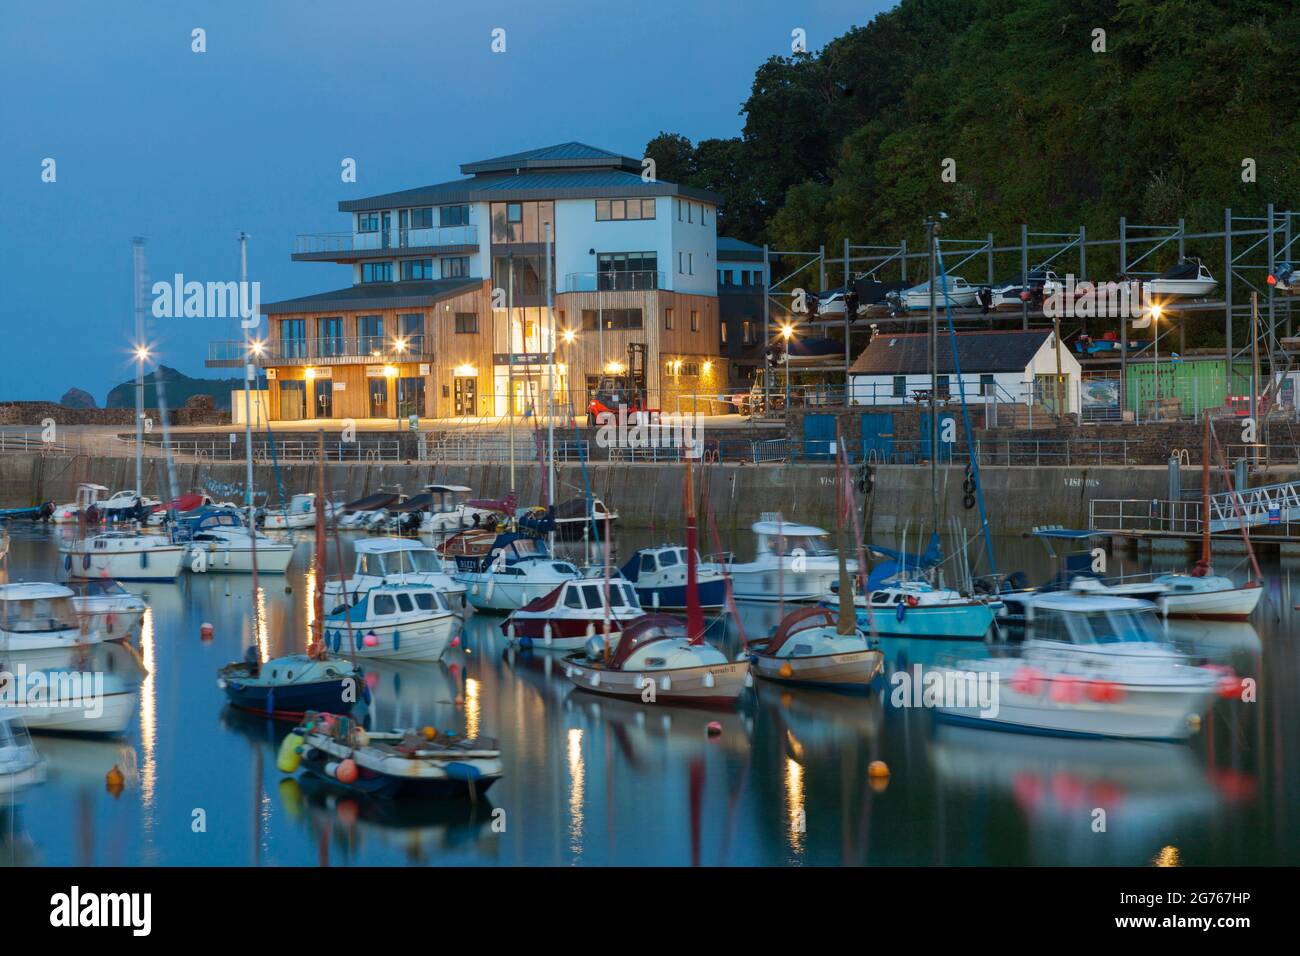 St Brides Spa Hotel, Saundersfoot Harbour, Pembrokeshire, Wales, UK Stock Photo